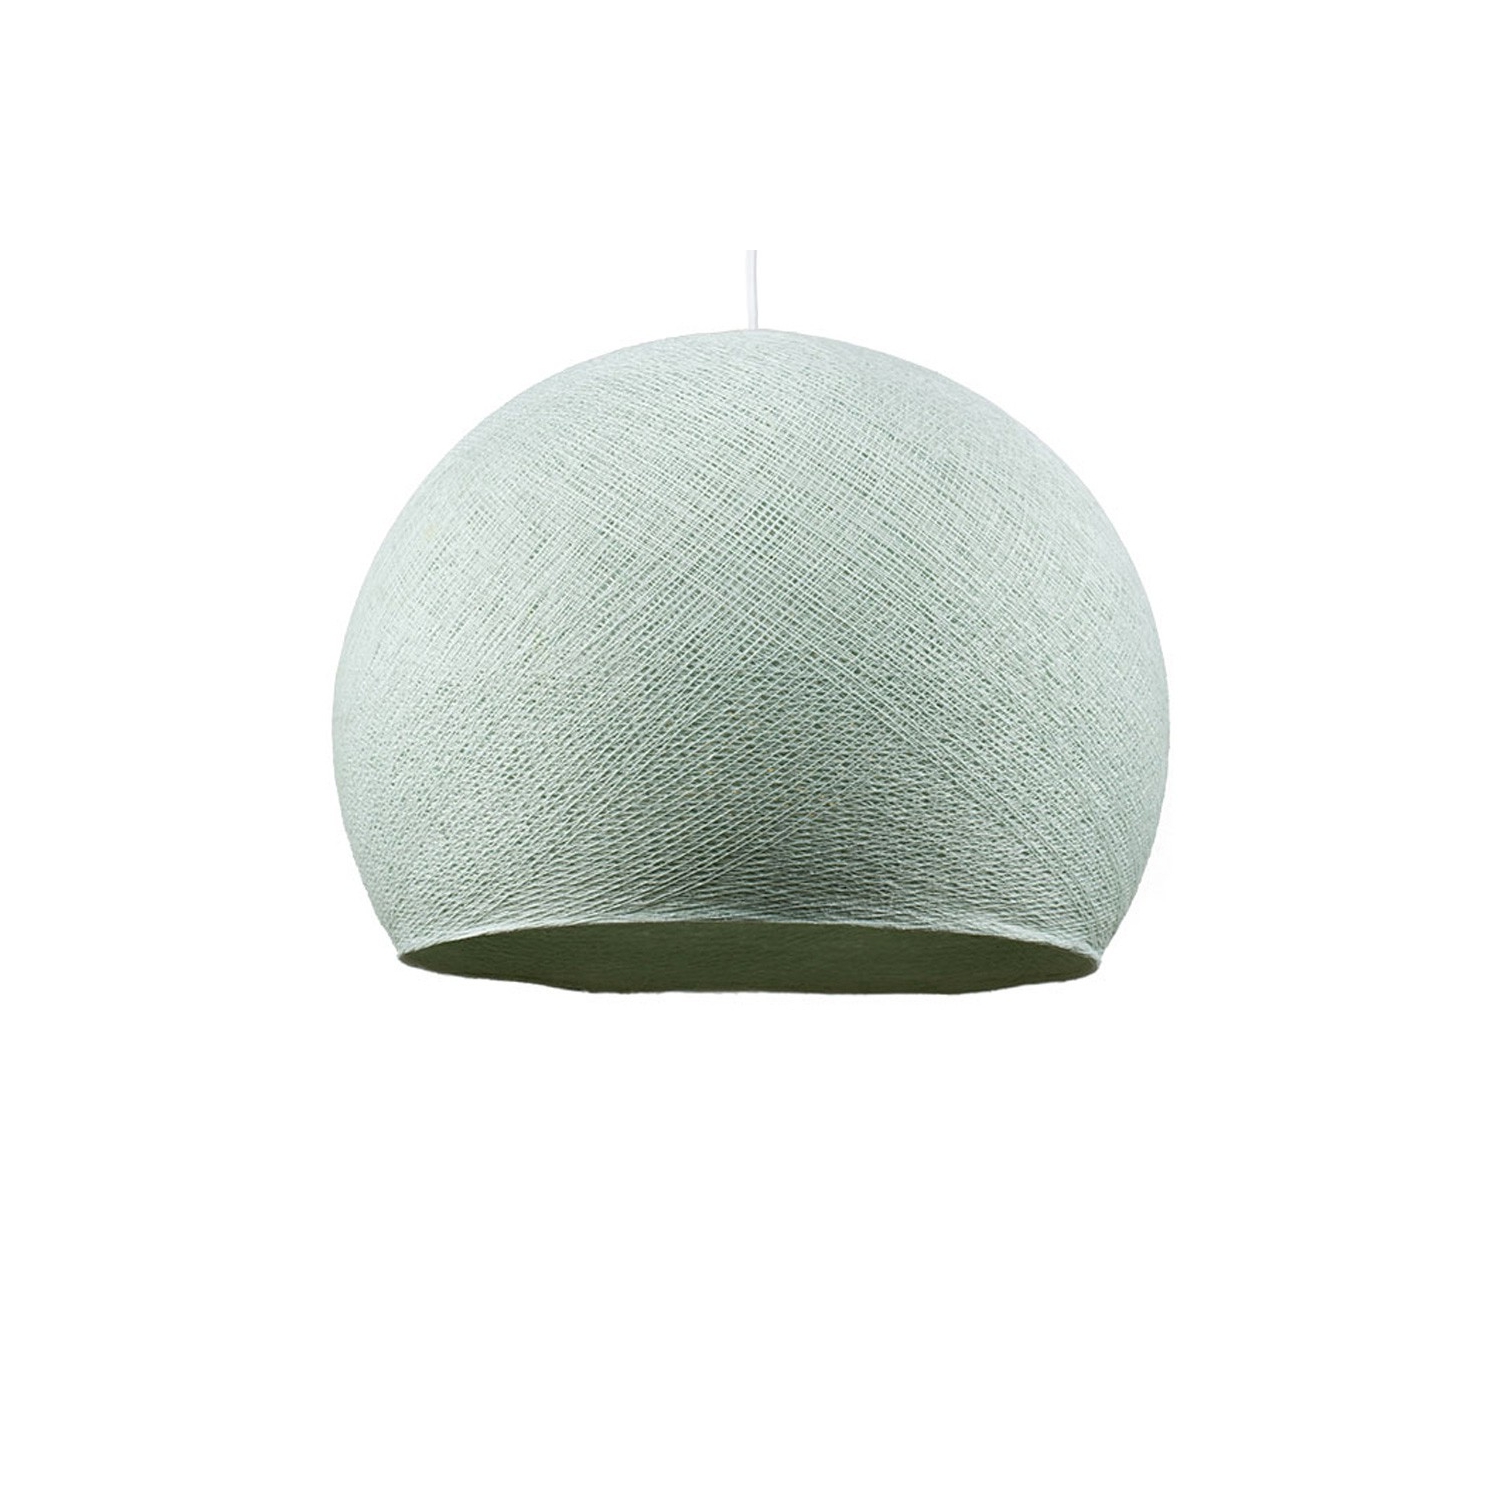 Dome M lampshade made of polyester fiber, 35 cm diameter - 100% handmade